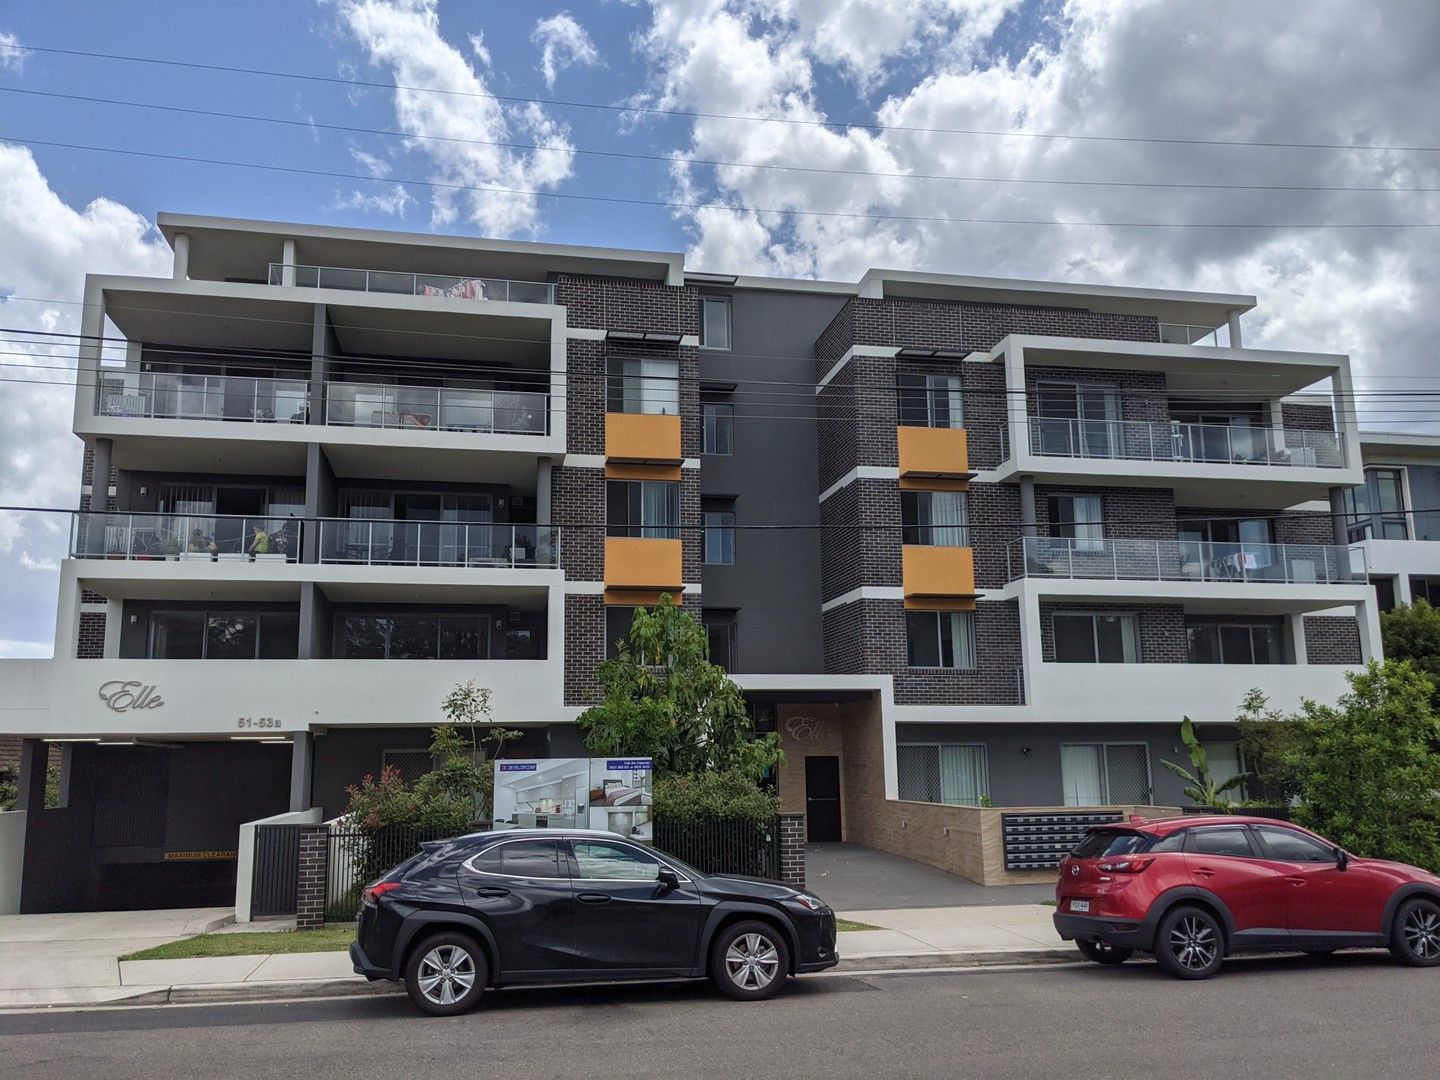 2 bedrooms Apartment / Unit / Flat in 8/51-53A Balmoral WAITARA NSW, 2077